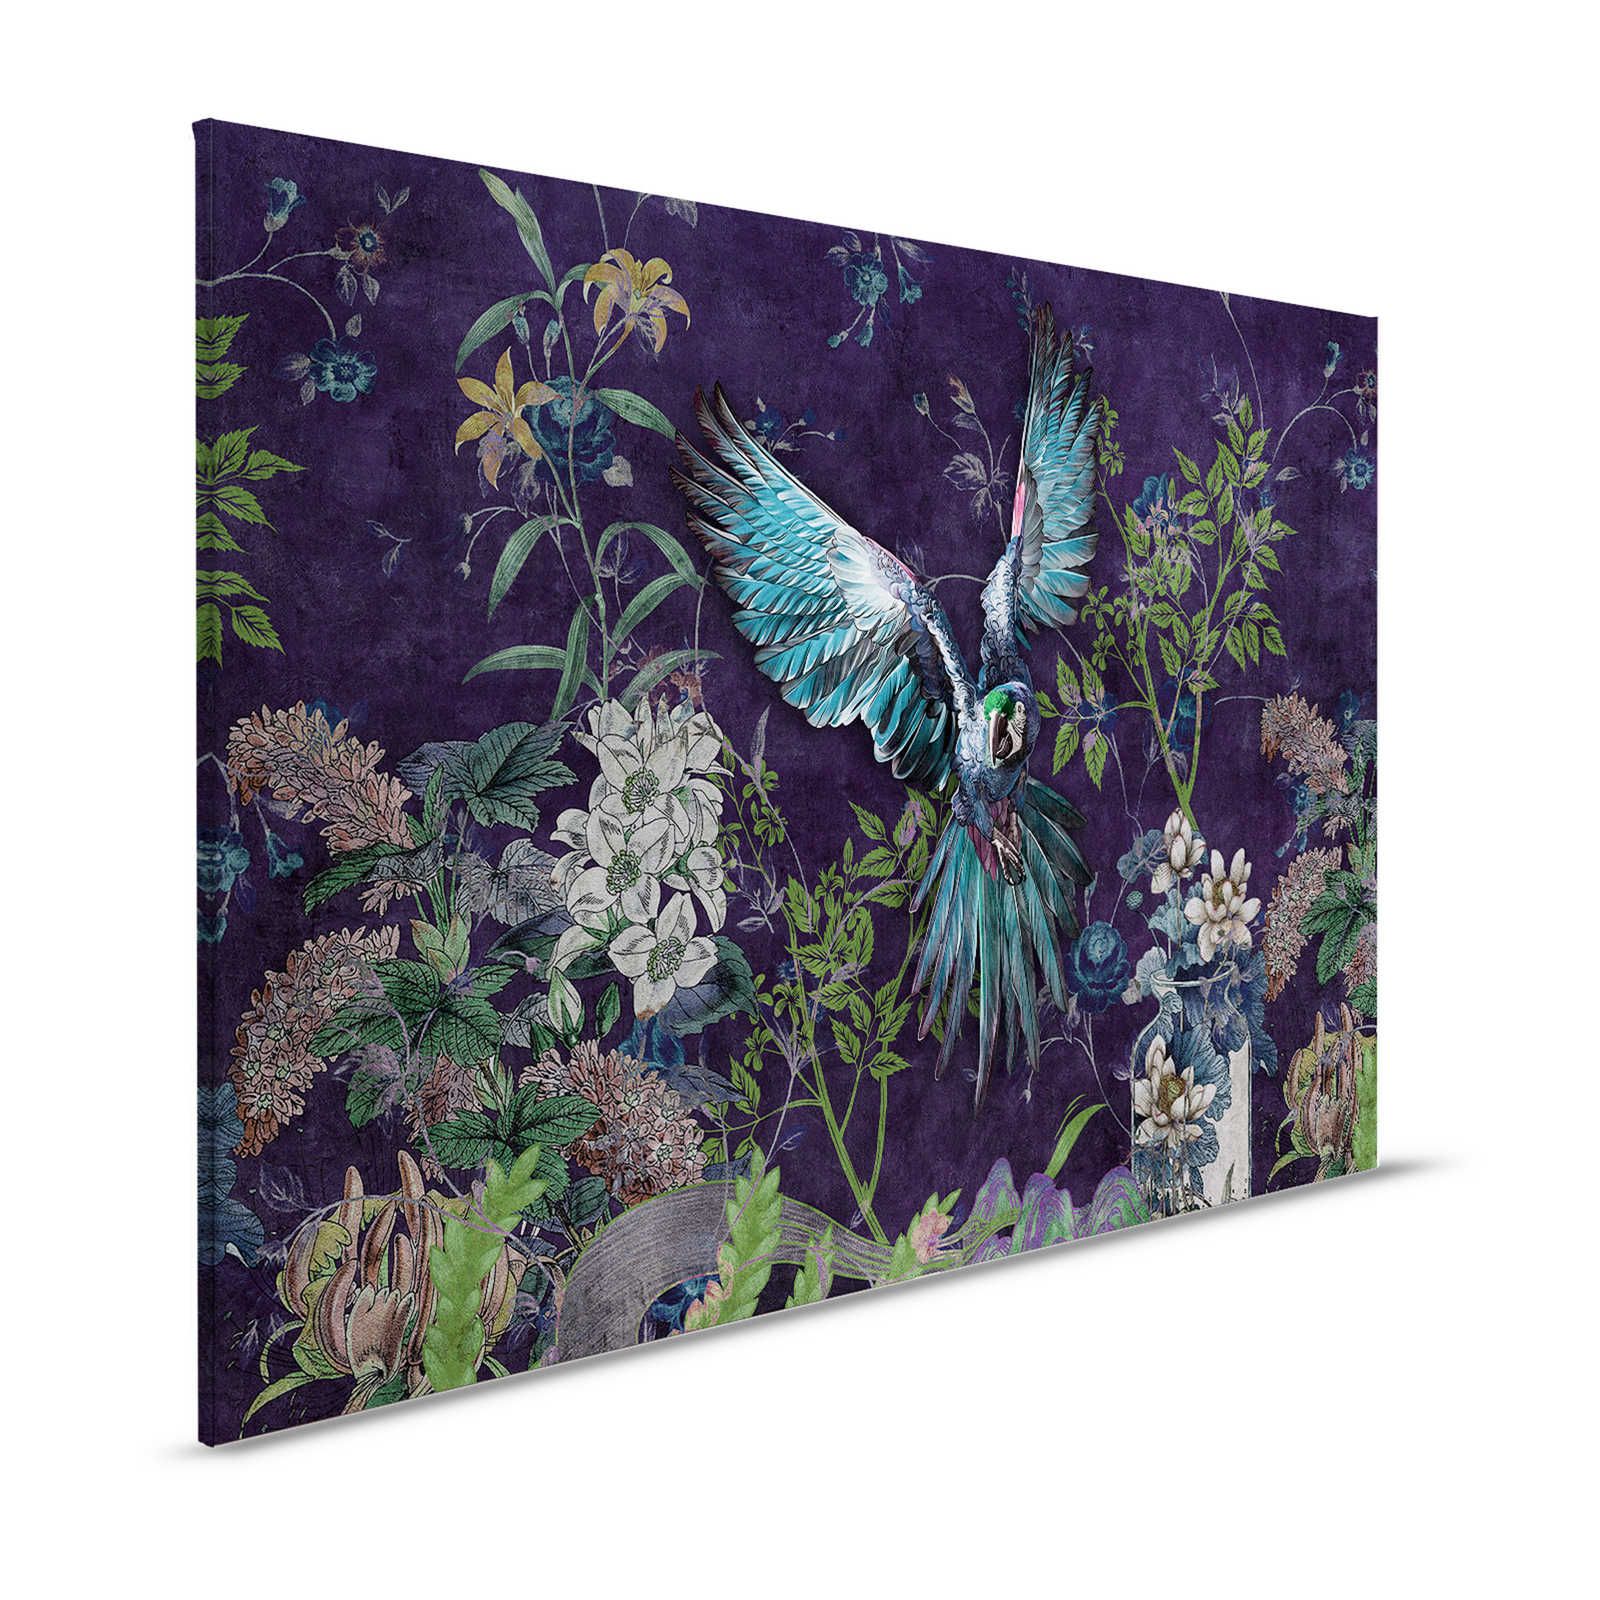 Tropical Hero 2 - Parrot Canvas painting Flowers & Black Background - 1.20 m x 0.80 m
